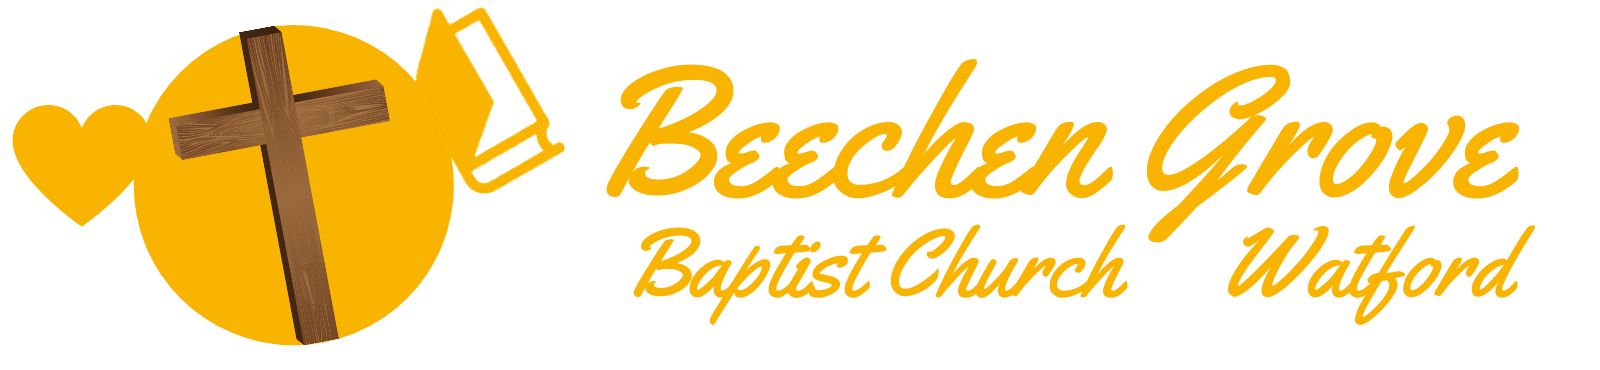 Beechen Grove Logo 1600 370